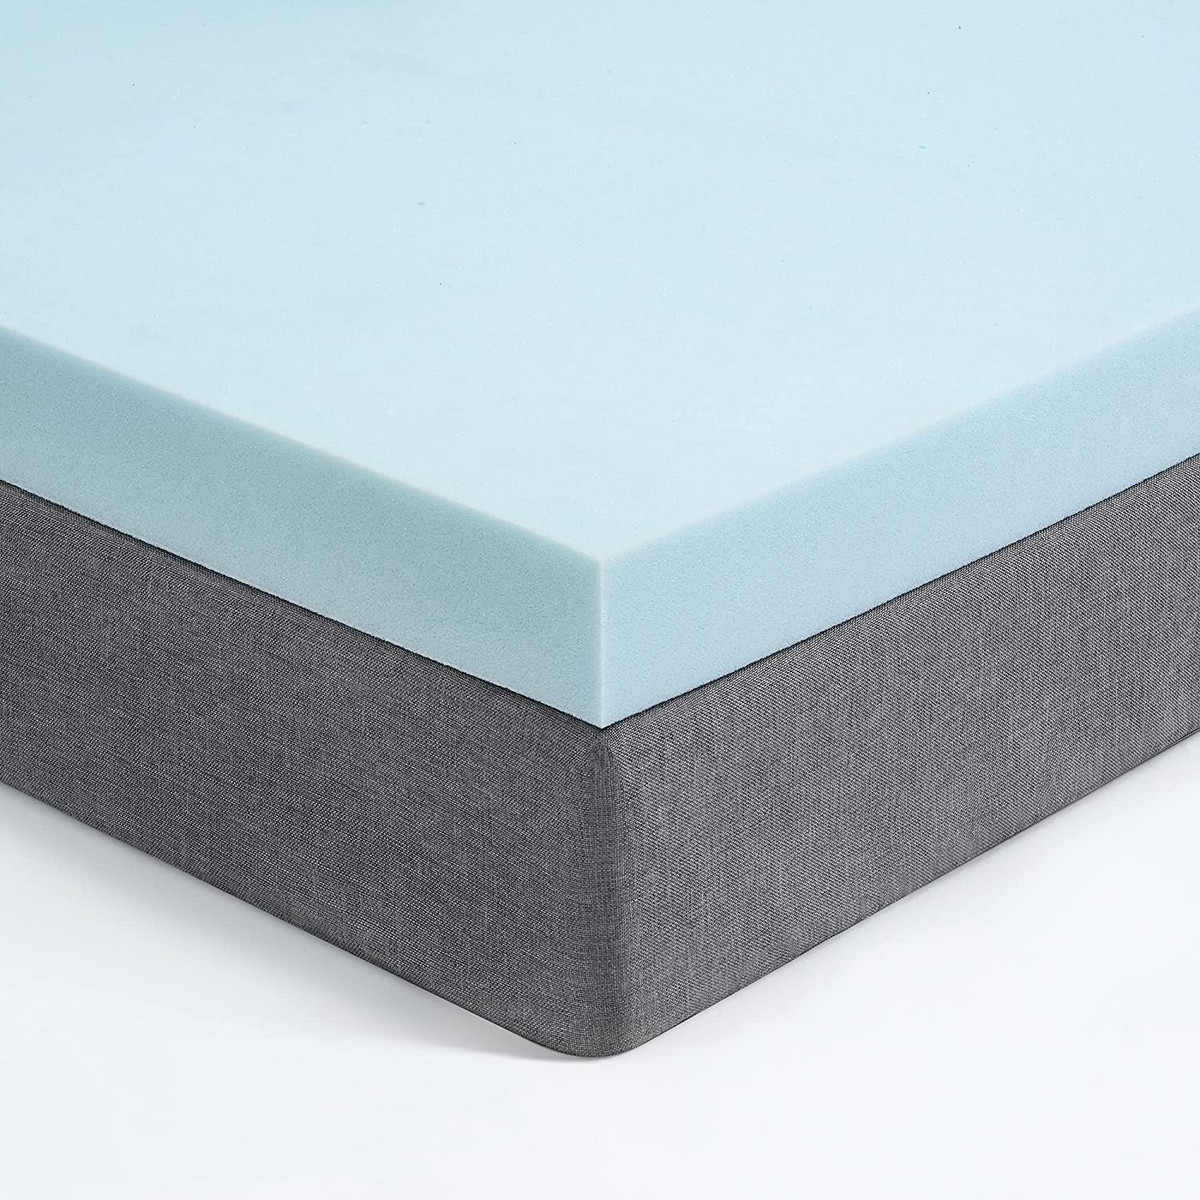 blue colored gel memory foam mattress